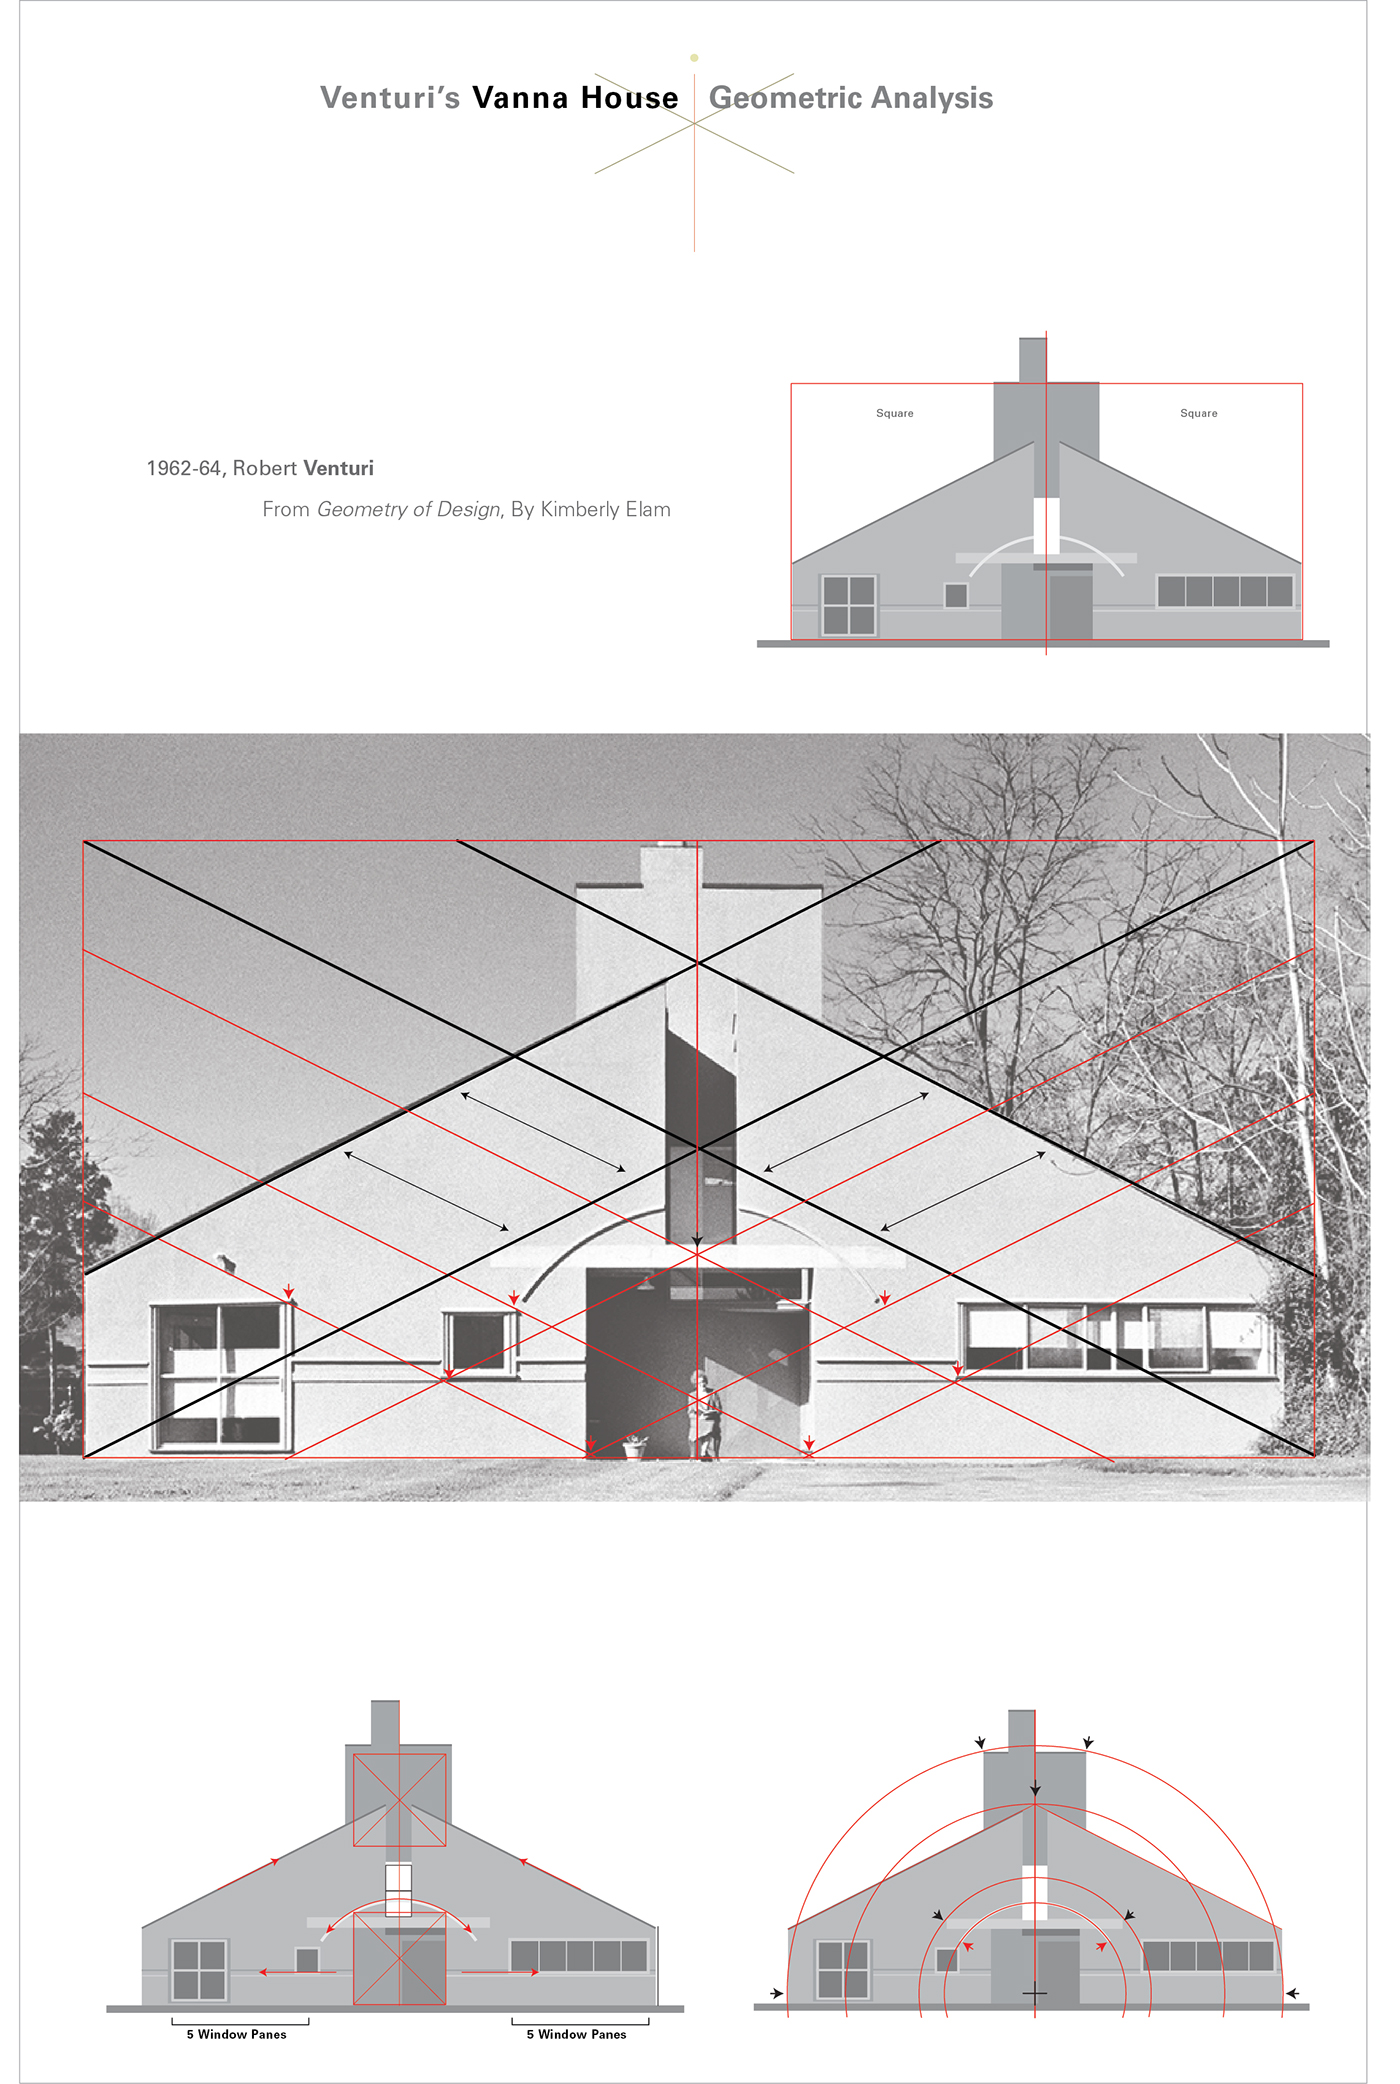 venturi vanna house  Geometry of Design Analysis geometry Post modern info graphic Kimberly Elam golden section proportion